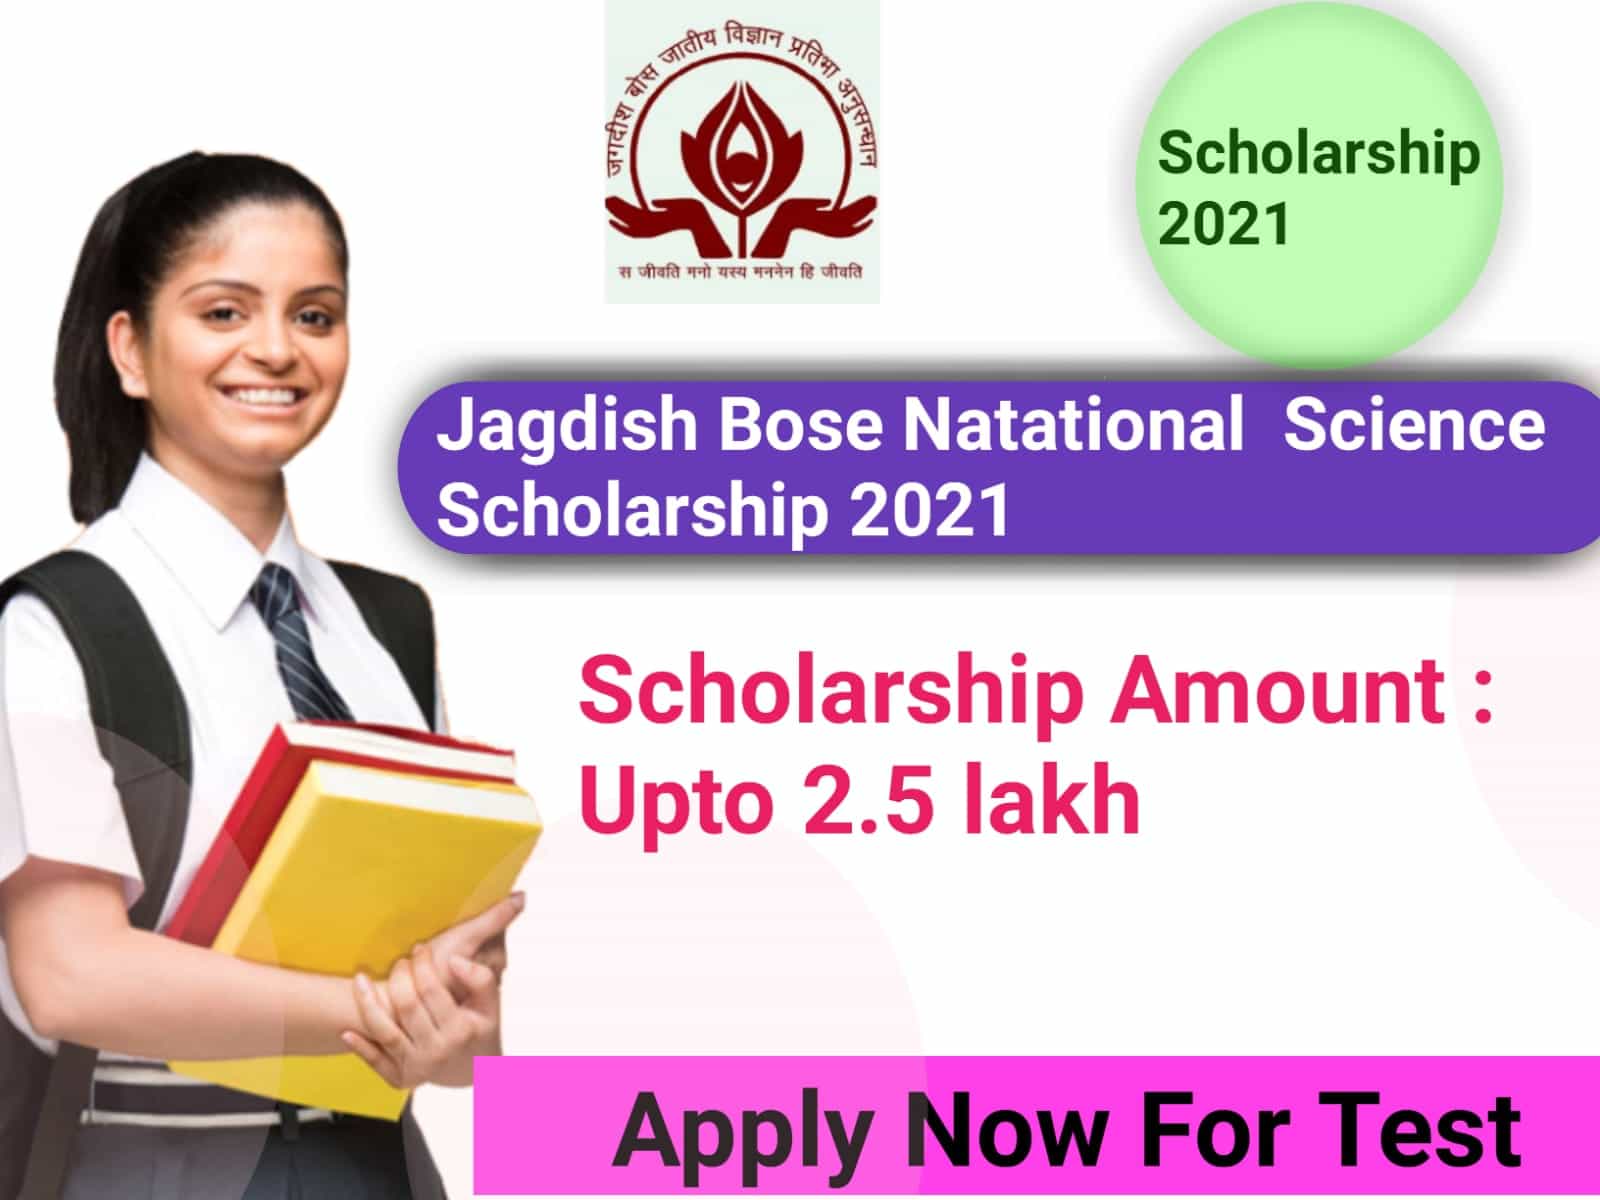 Jagadis Bose National Science Scholarship 2021 | JBNSTS Scholarship 2021 Online Application Process | JBNST Junior Talent Search Examination 2021 - Post Image